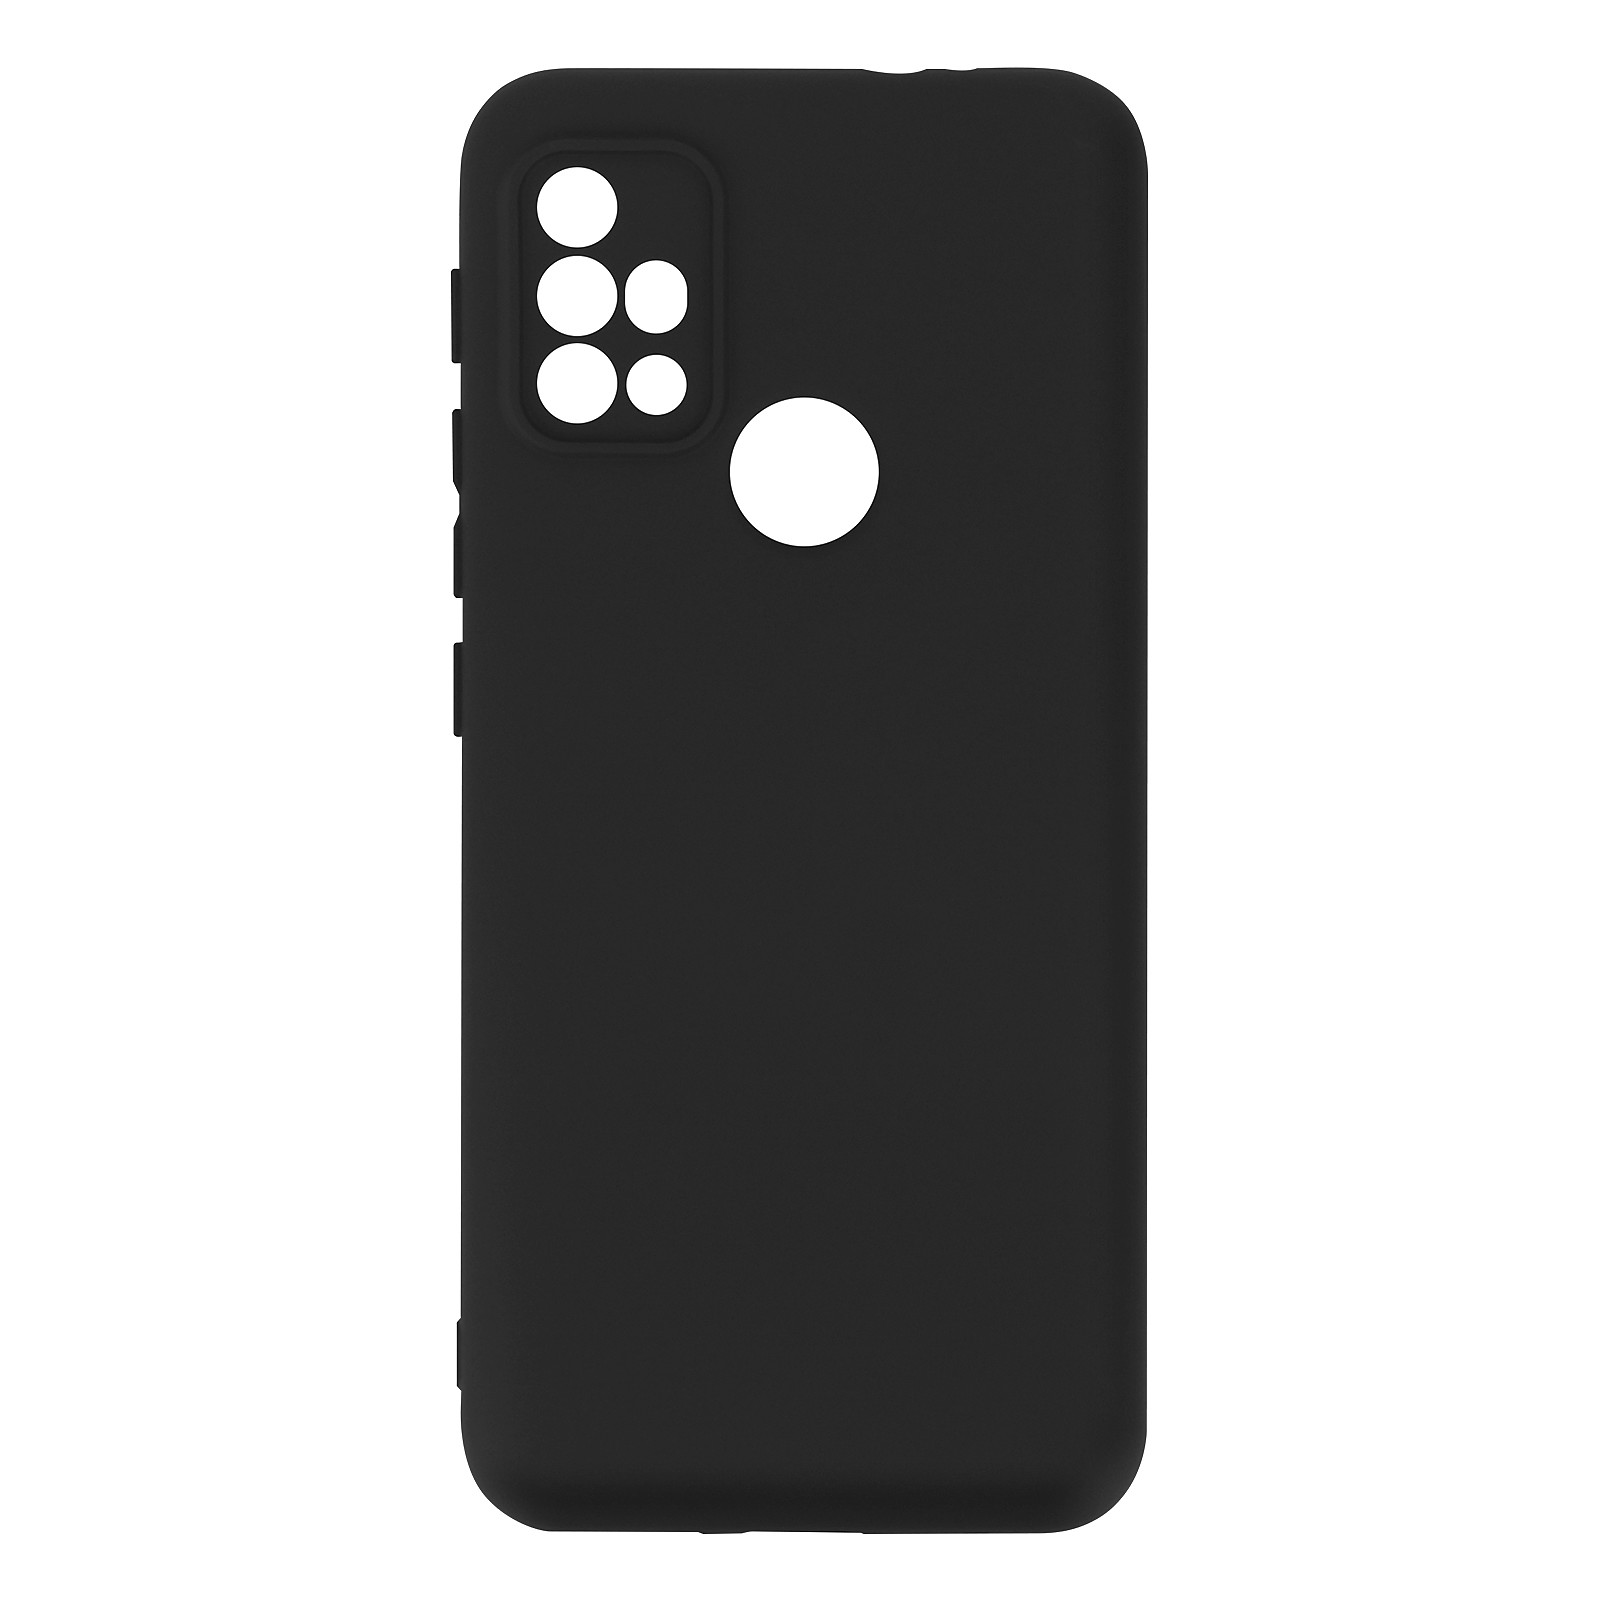 Avizar Coque pour Motorola Moto G10 et G30 Silicone Semi-rigide Finition Soft Touch Fine Noir - Coque telephone Avizar